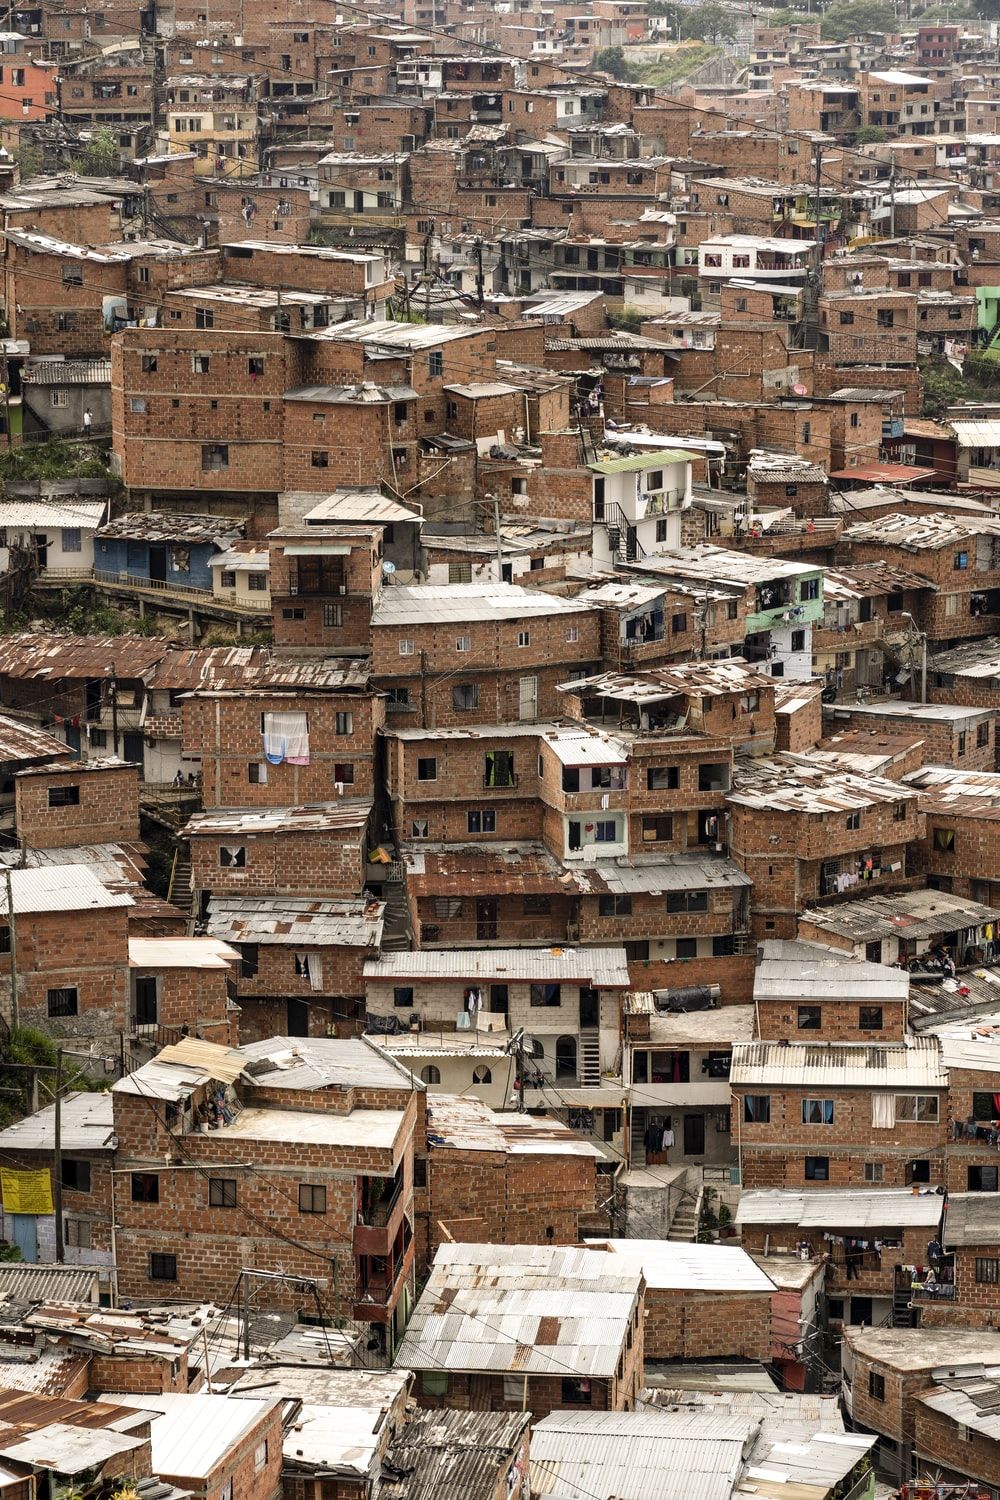 Slum Picture. Download Free Image